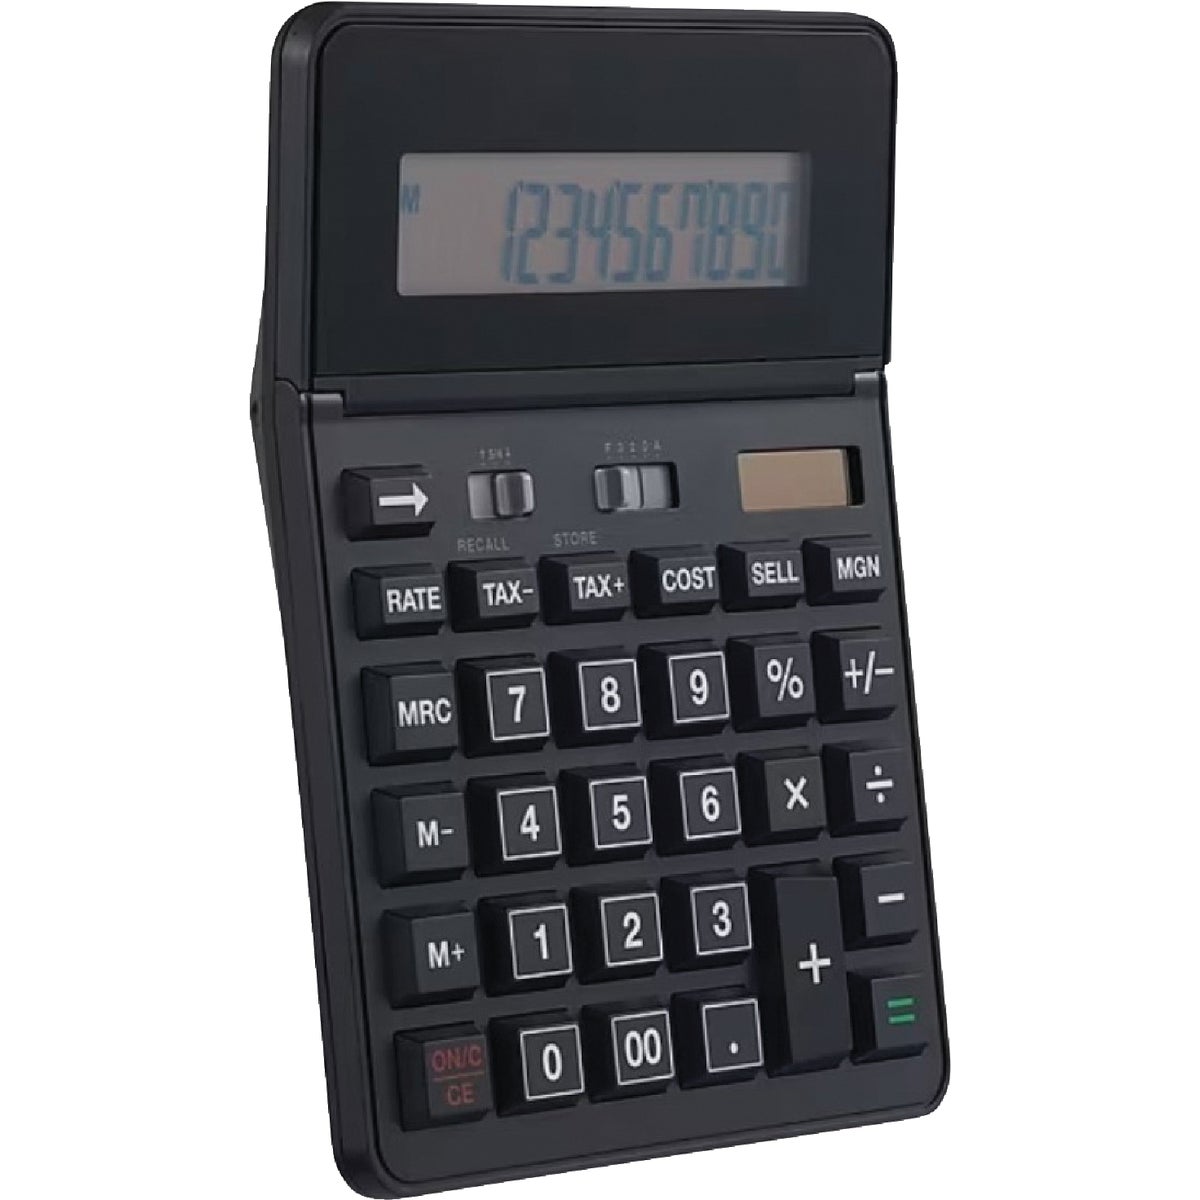 Item 974382, Multifunction desktop calculator.